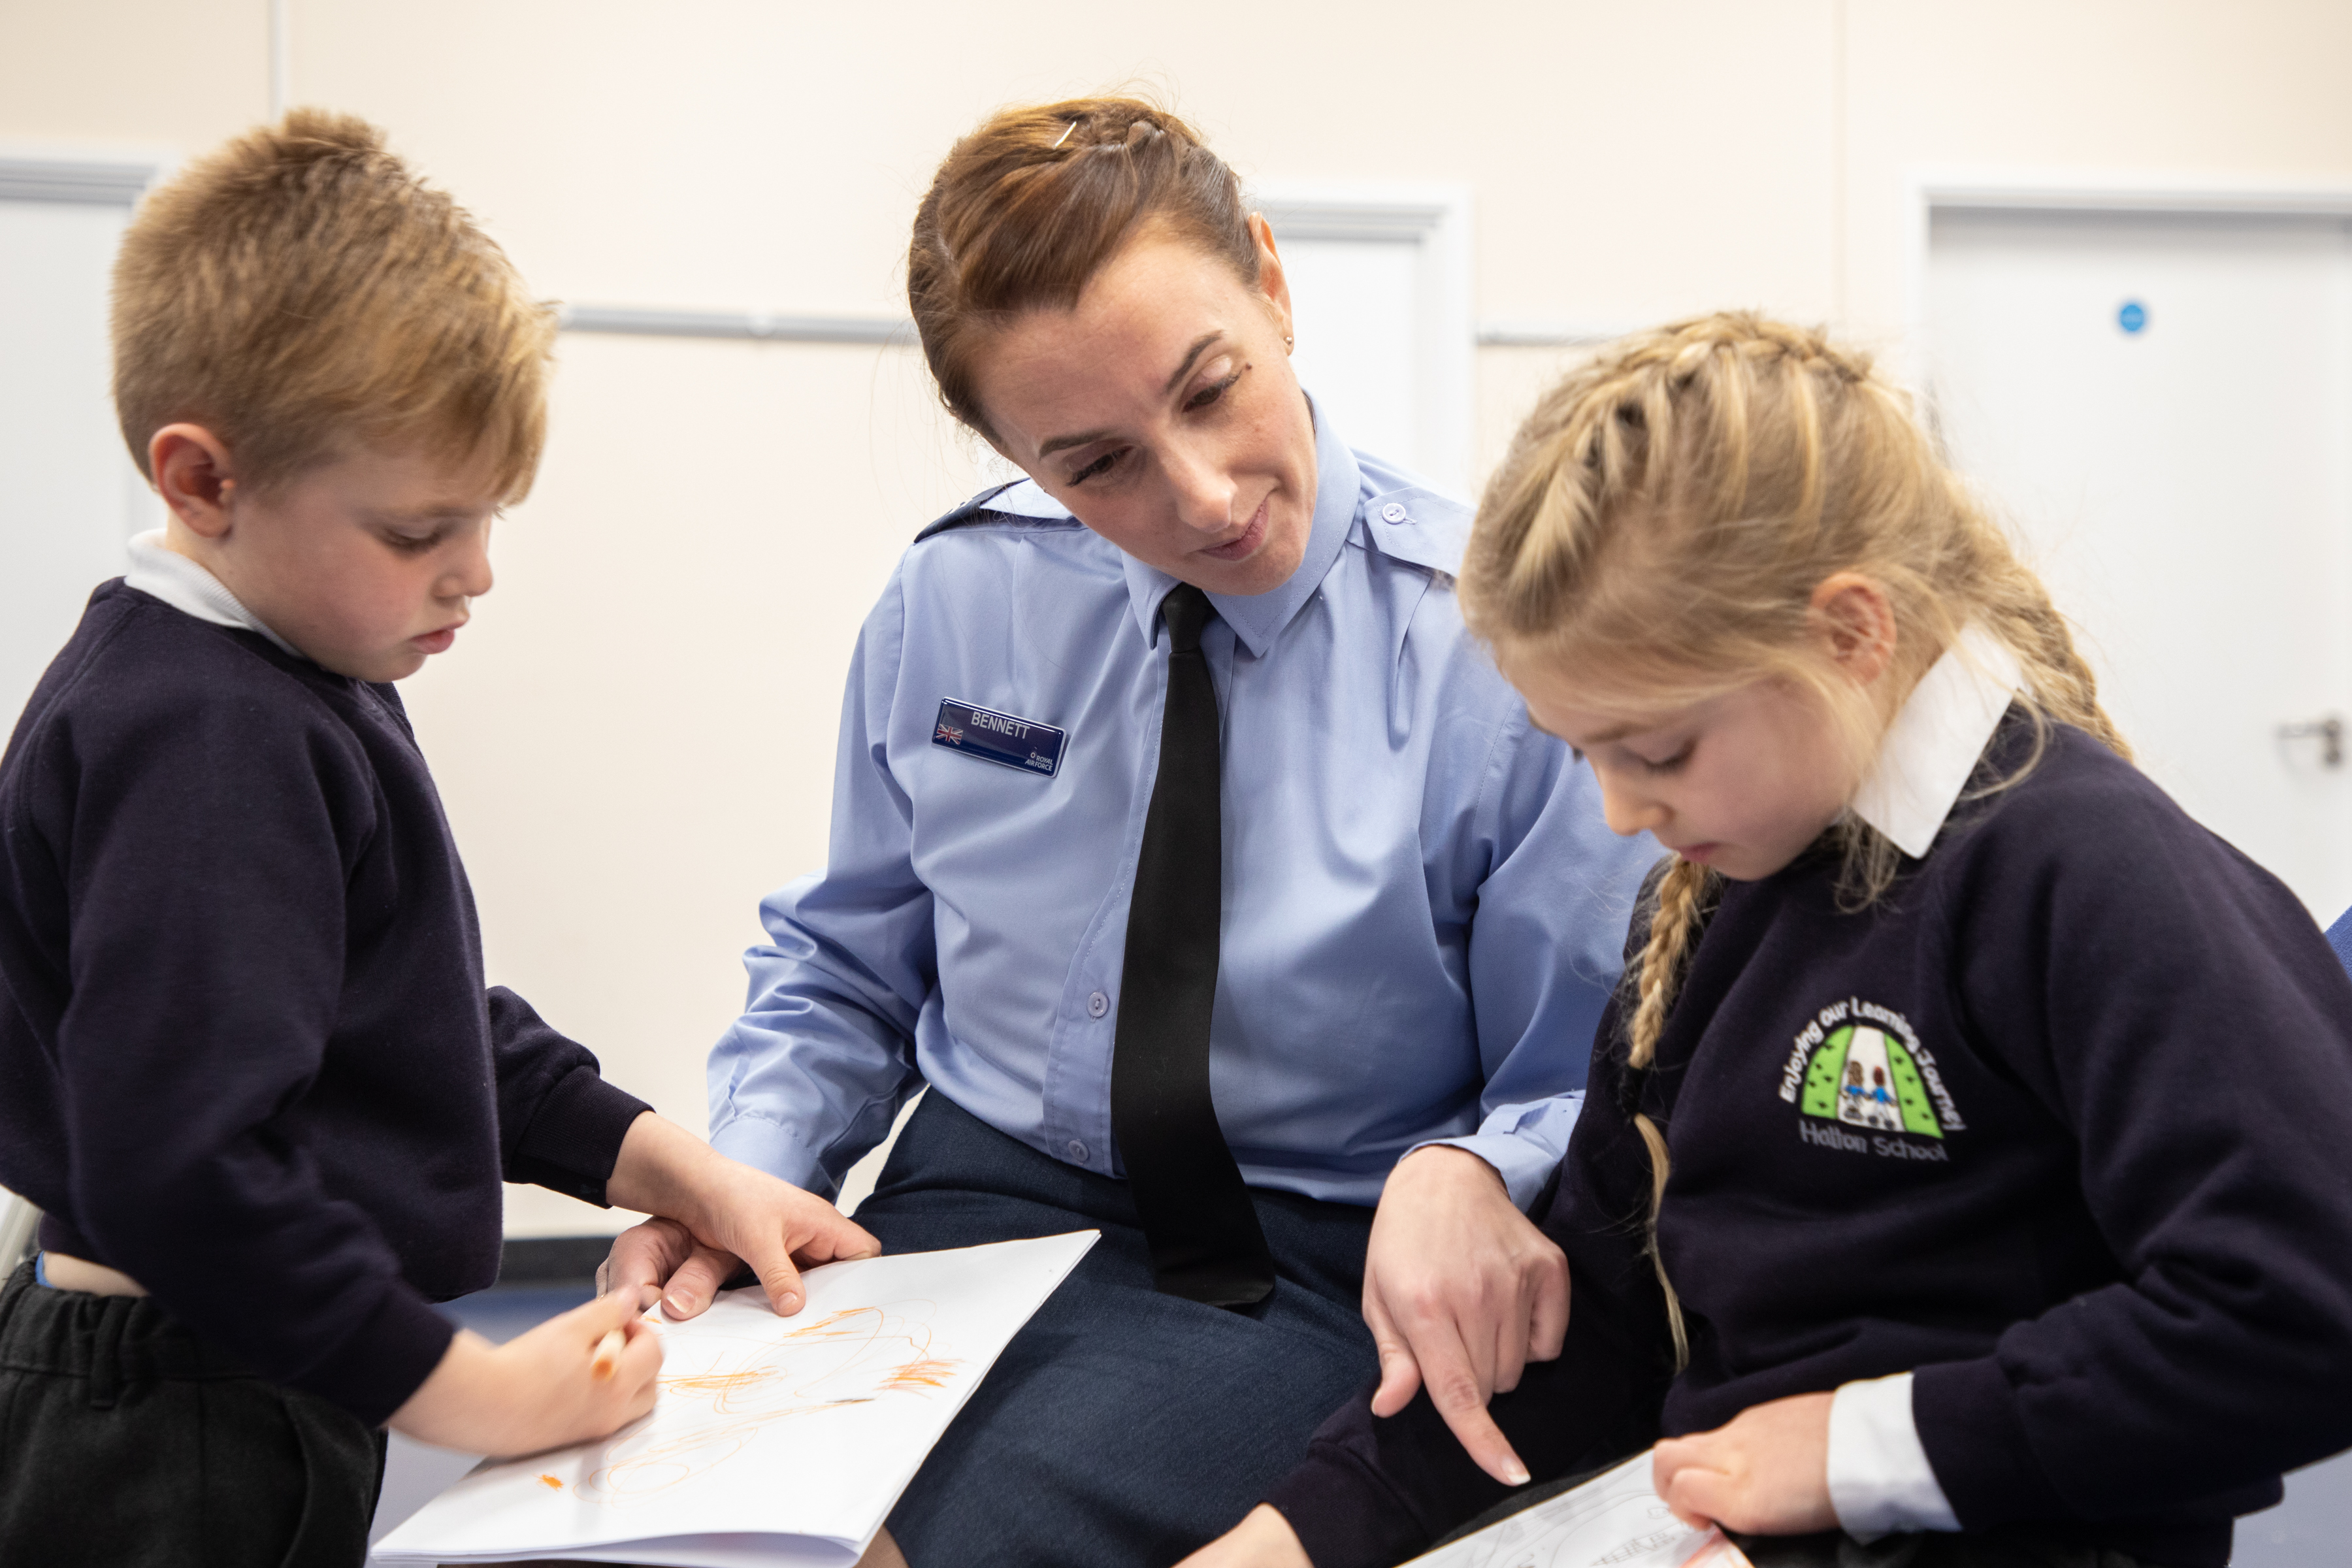 Image shows RAF aviator with school children writing.